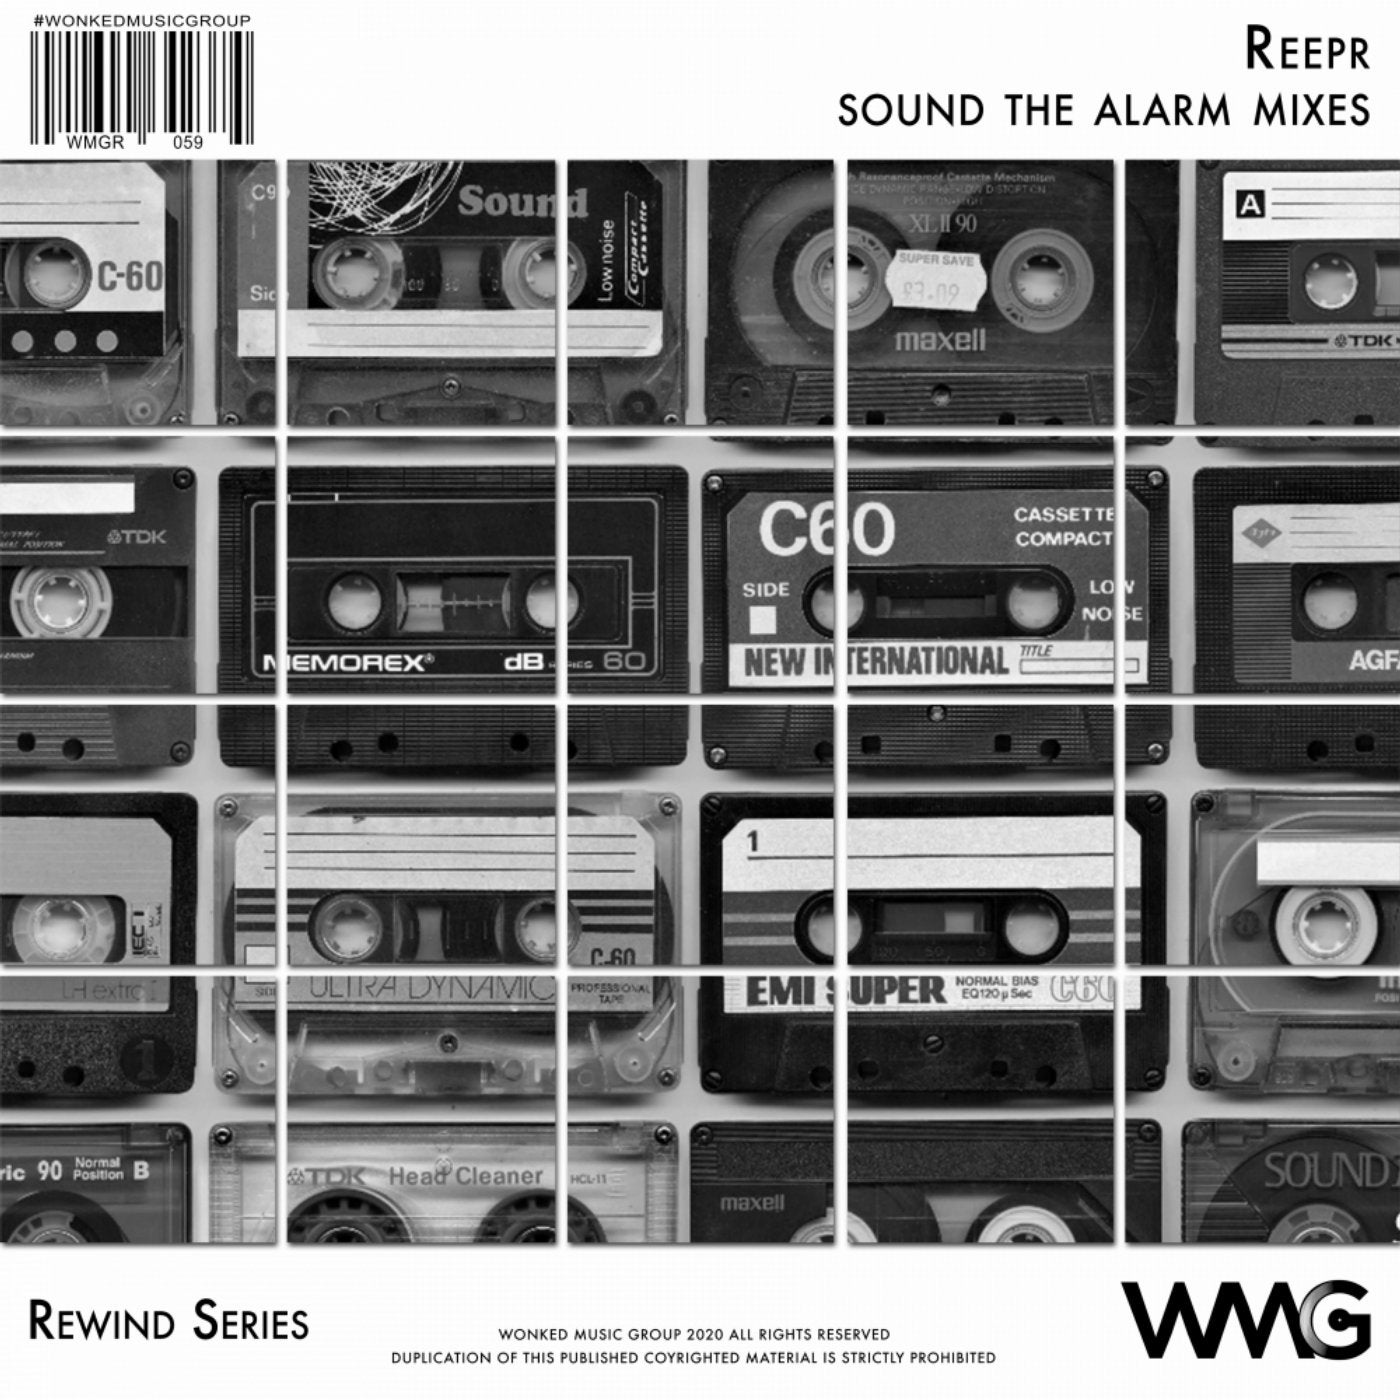 Rewind Series: ReepR - Sound The Alarm Mixes